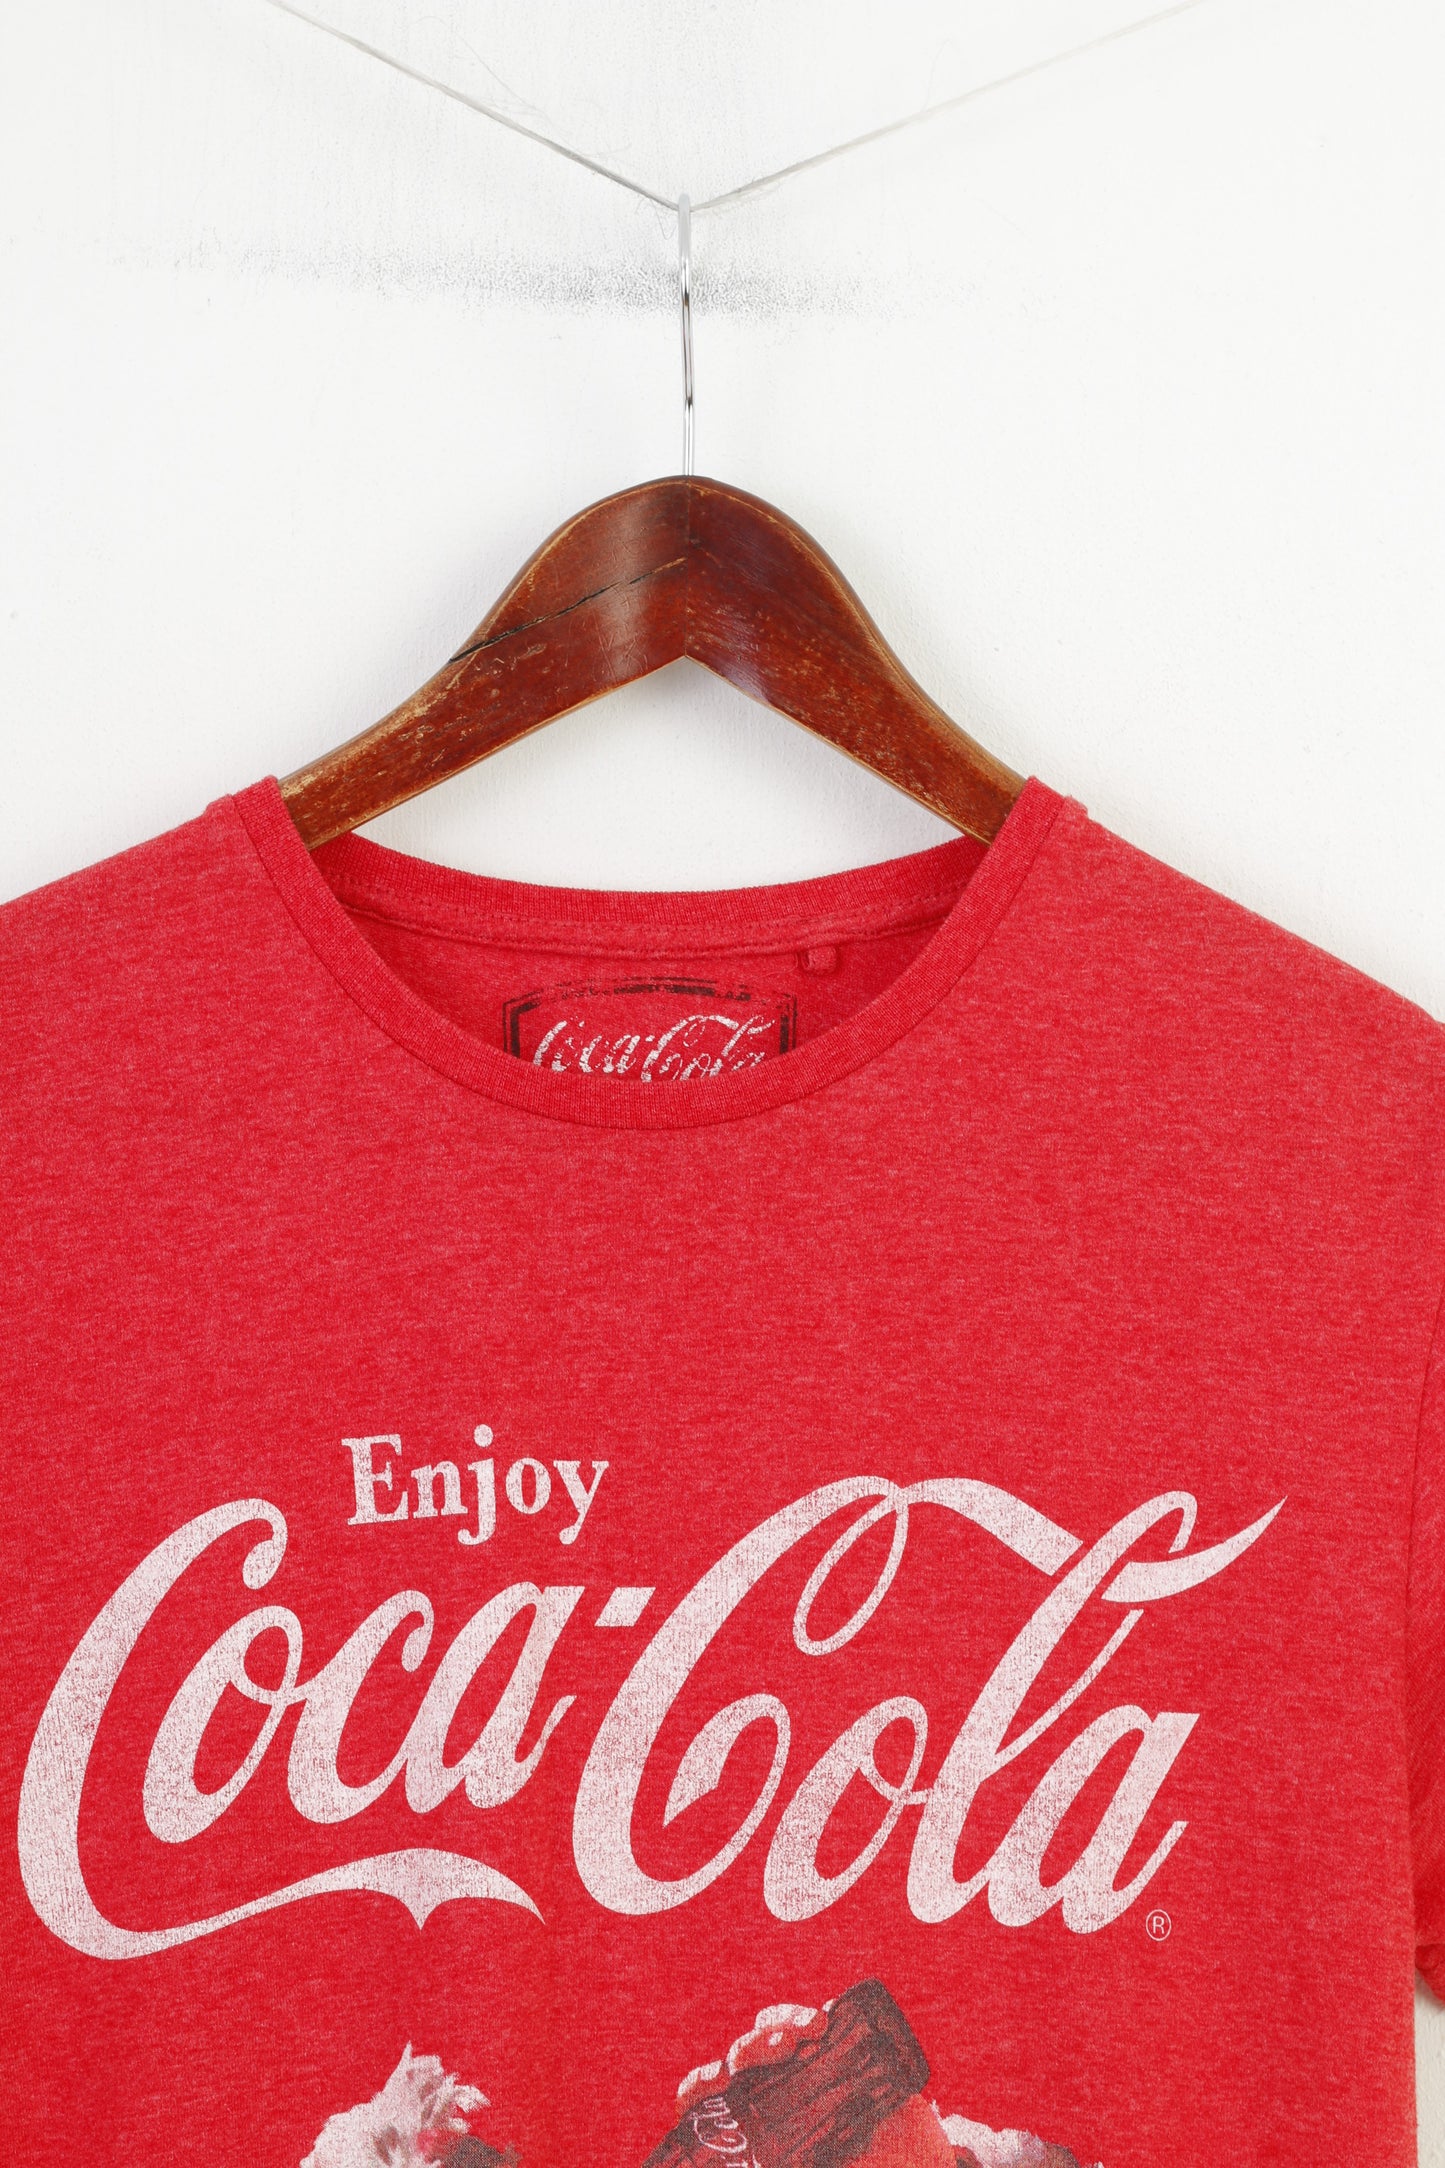 Cedar Wood State Women M Shirt Red Enjoy Coca-cola Christmass Graphic Short Sleeve Cotton Top